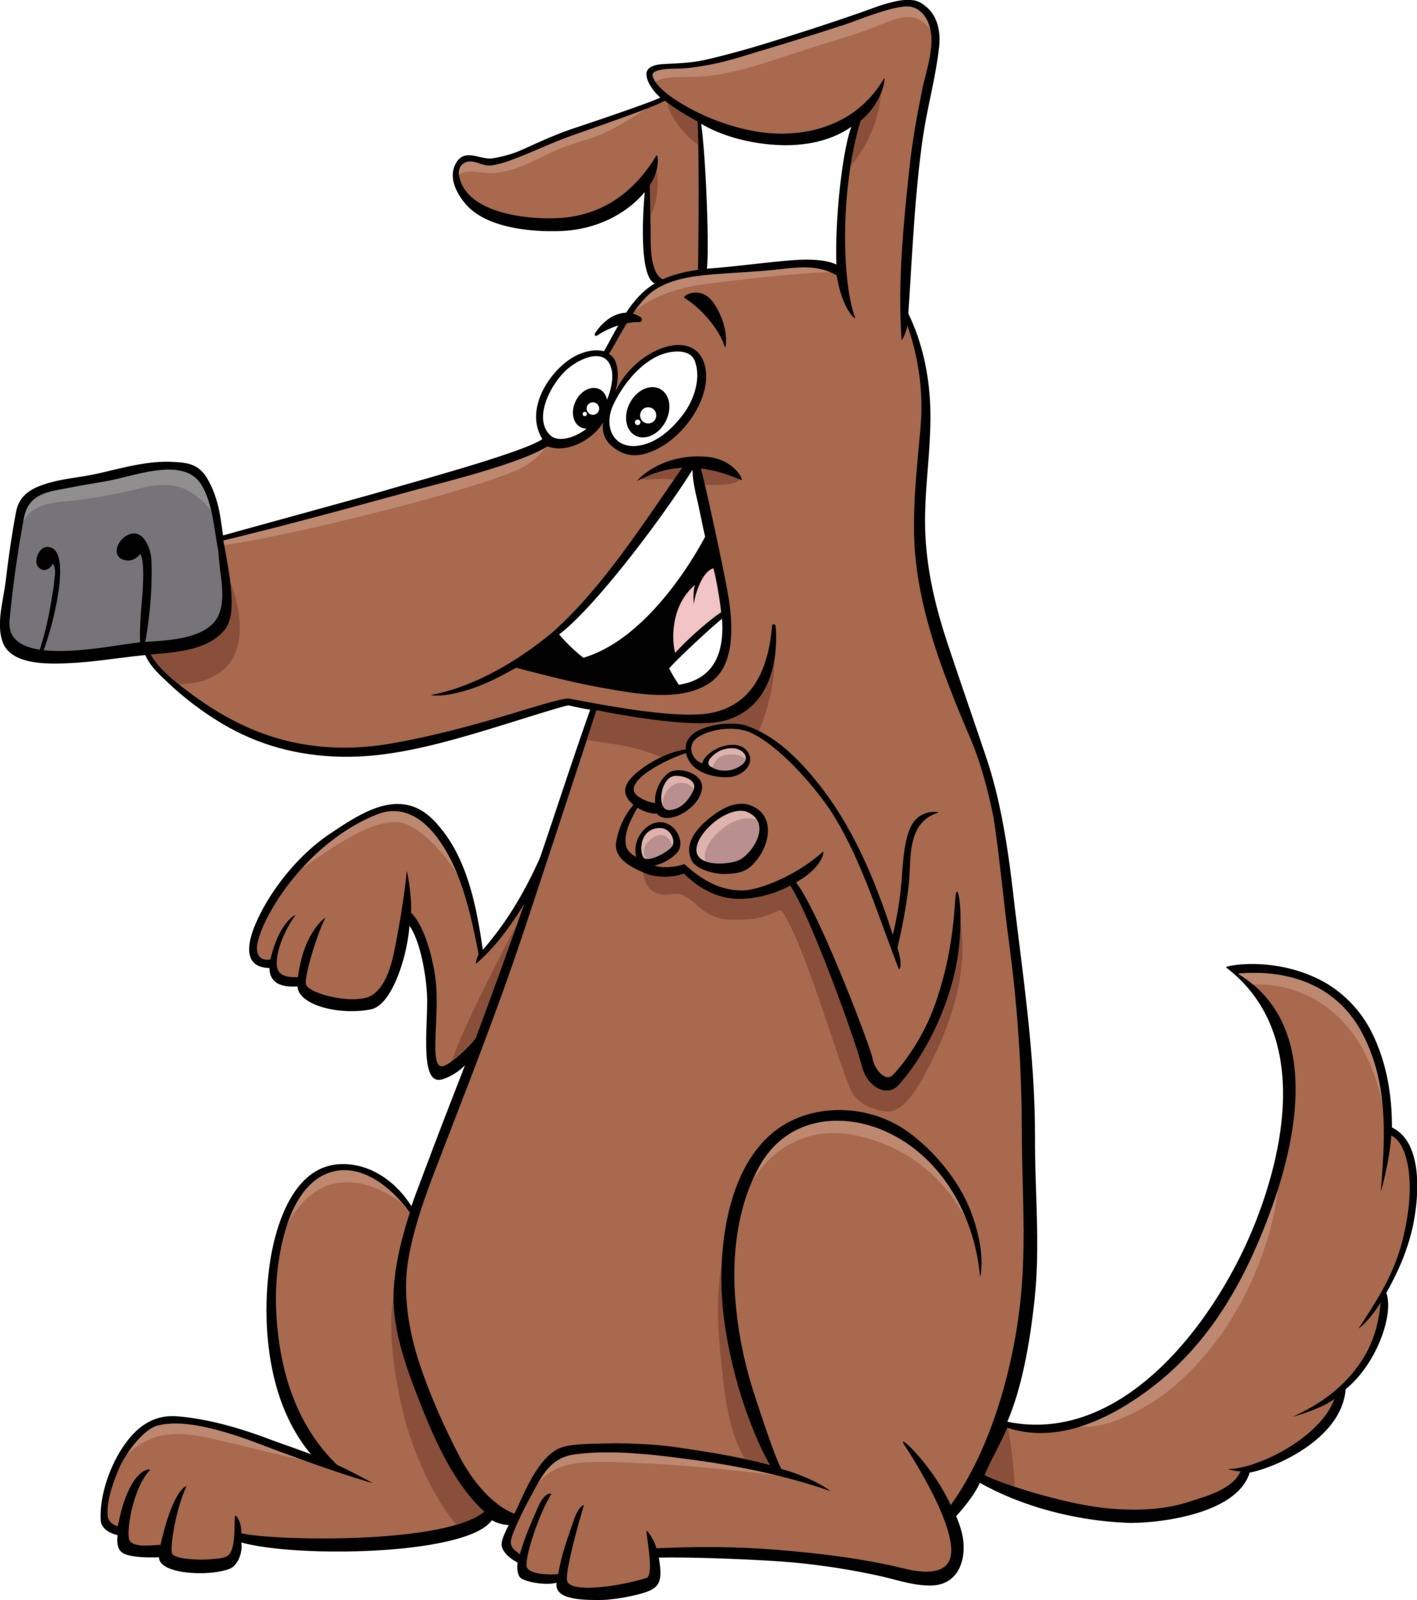 cartoon playful brown dog animal character by izakowski